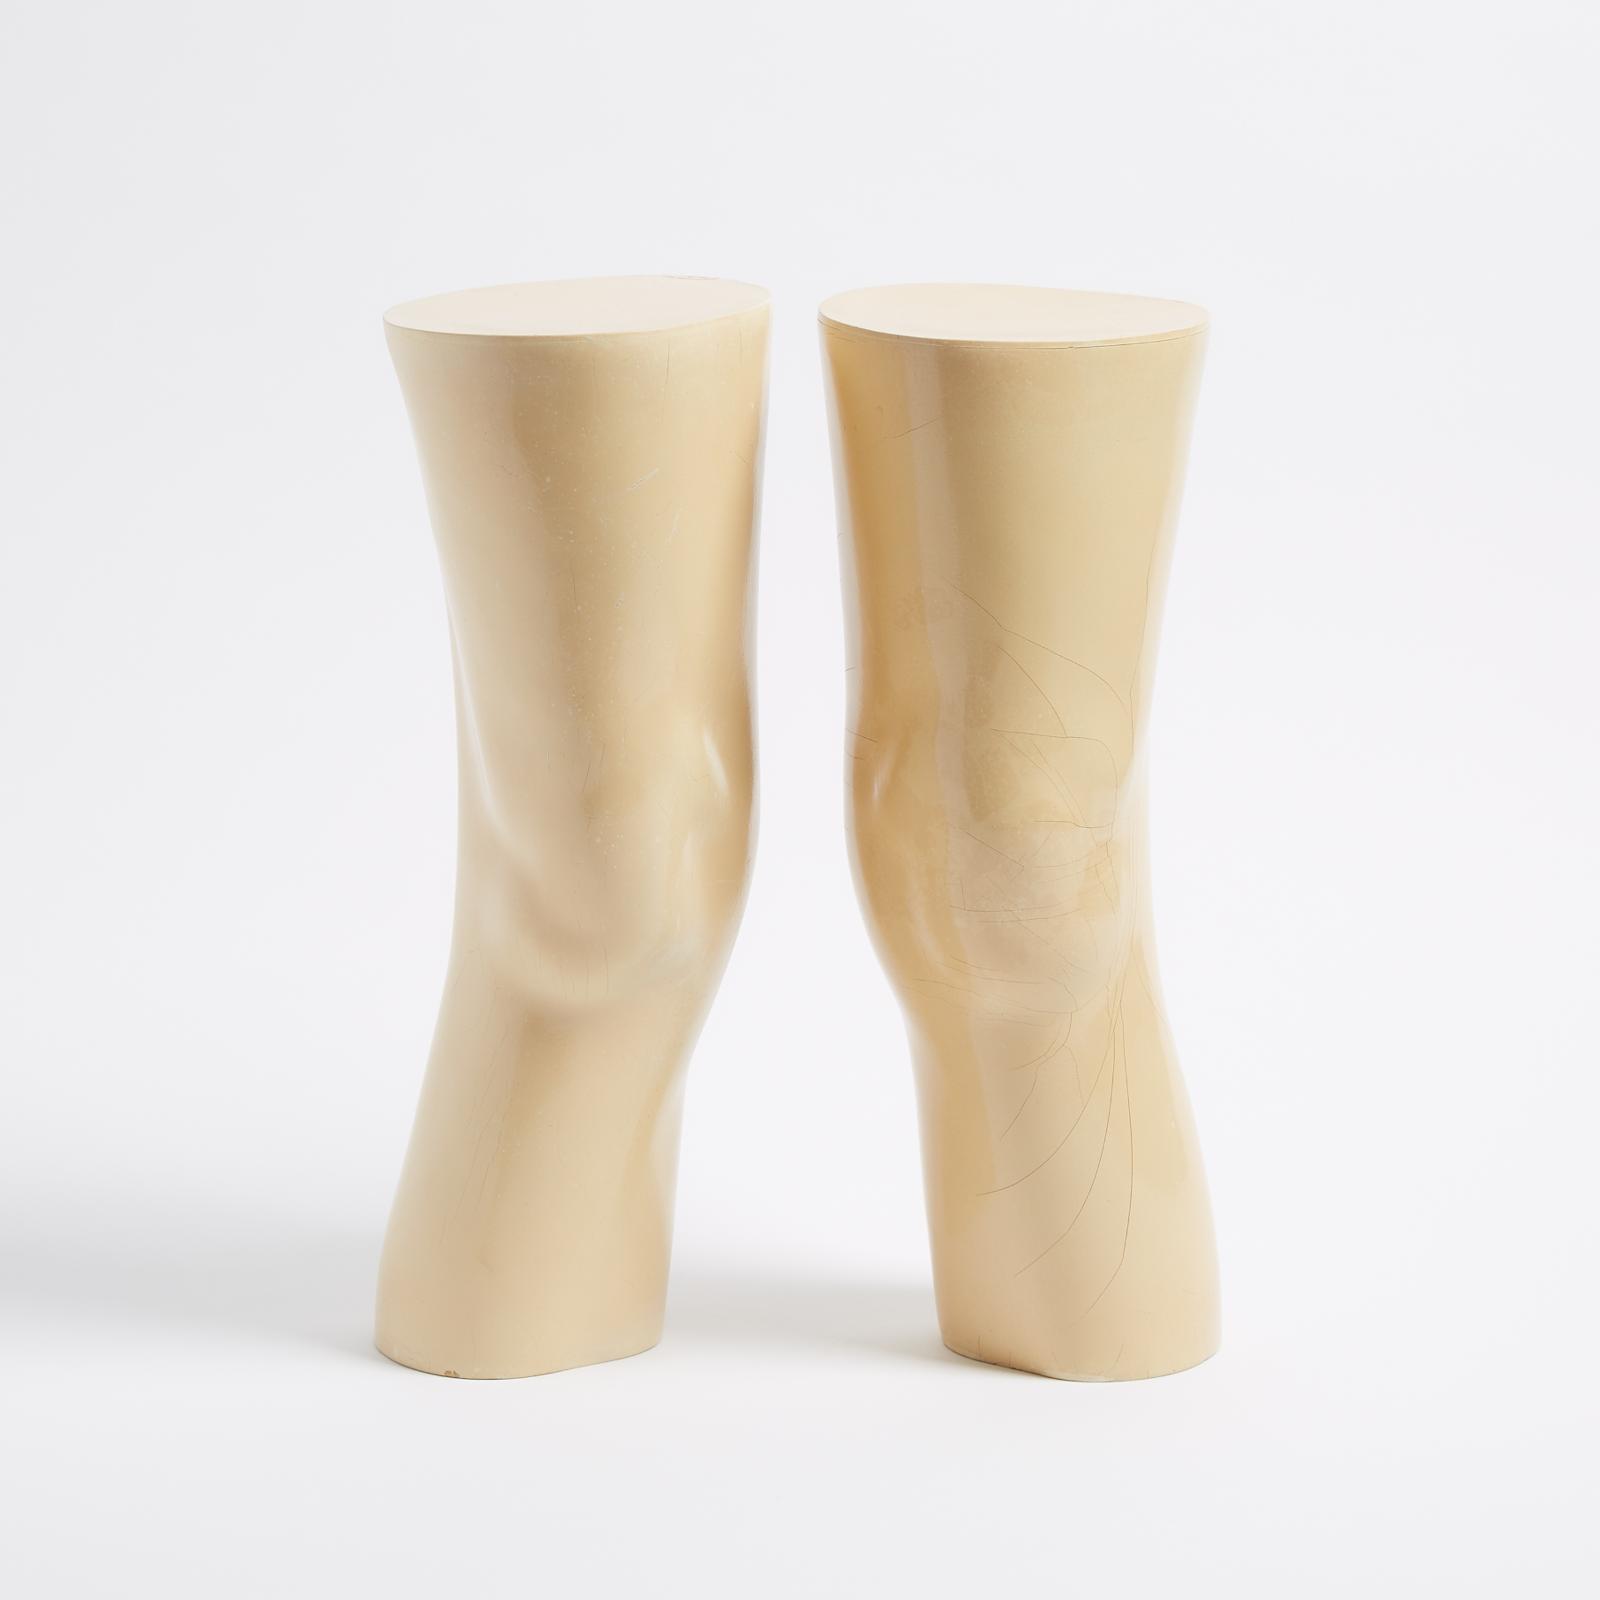 Claes Oldenburg (1929) - London Knees, 1966 [platzker, 8]